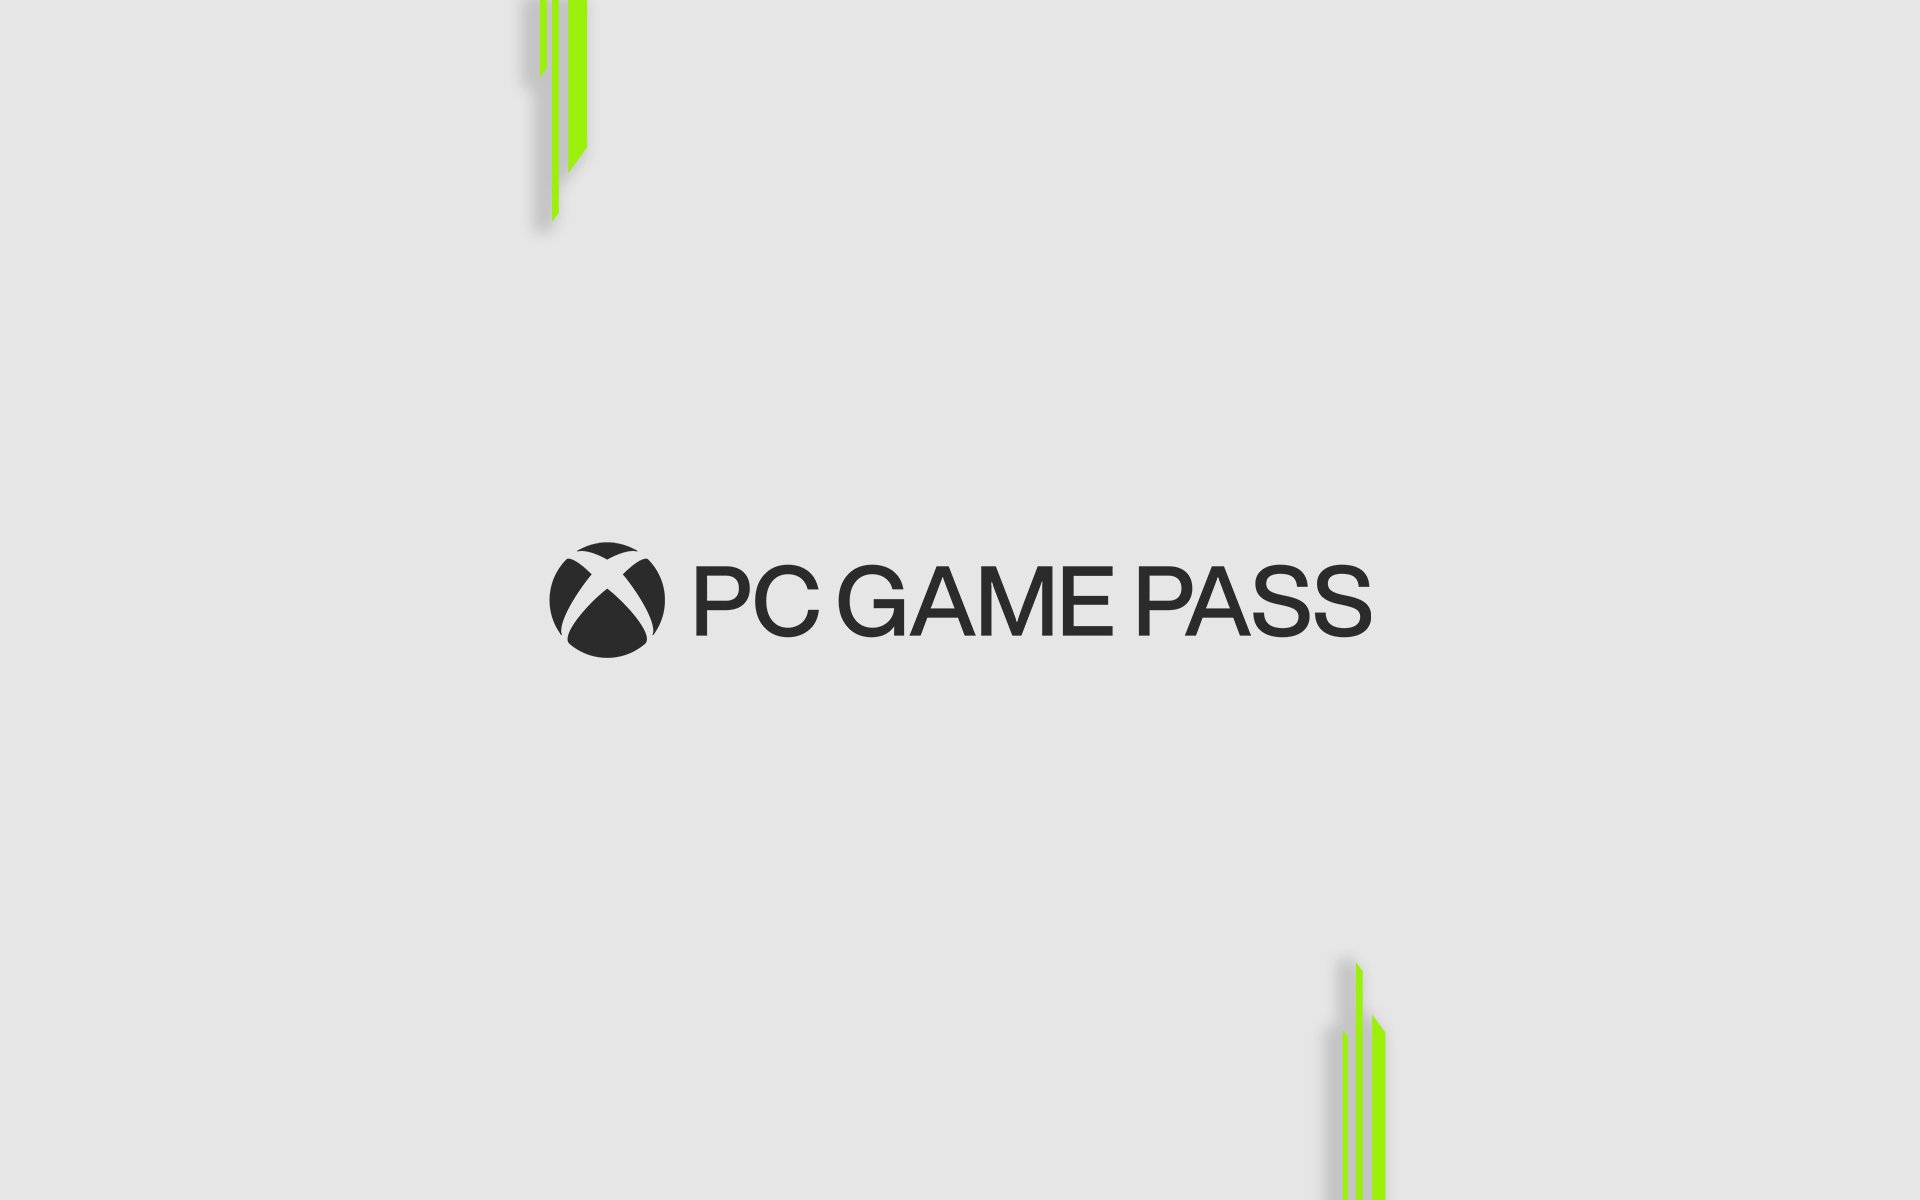 XBOX GAME PASS PC: 3 MESES –